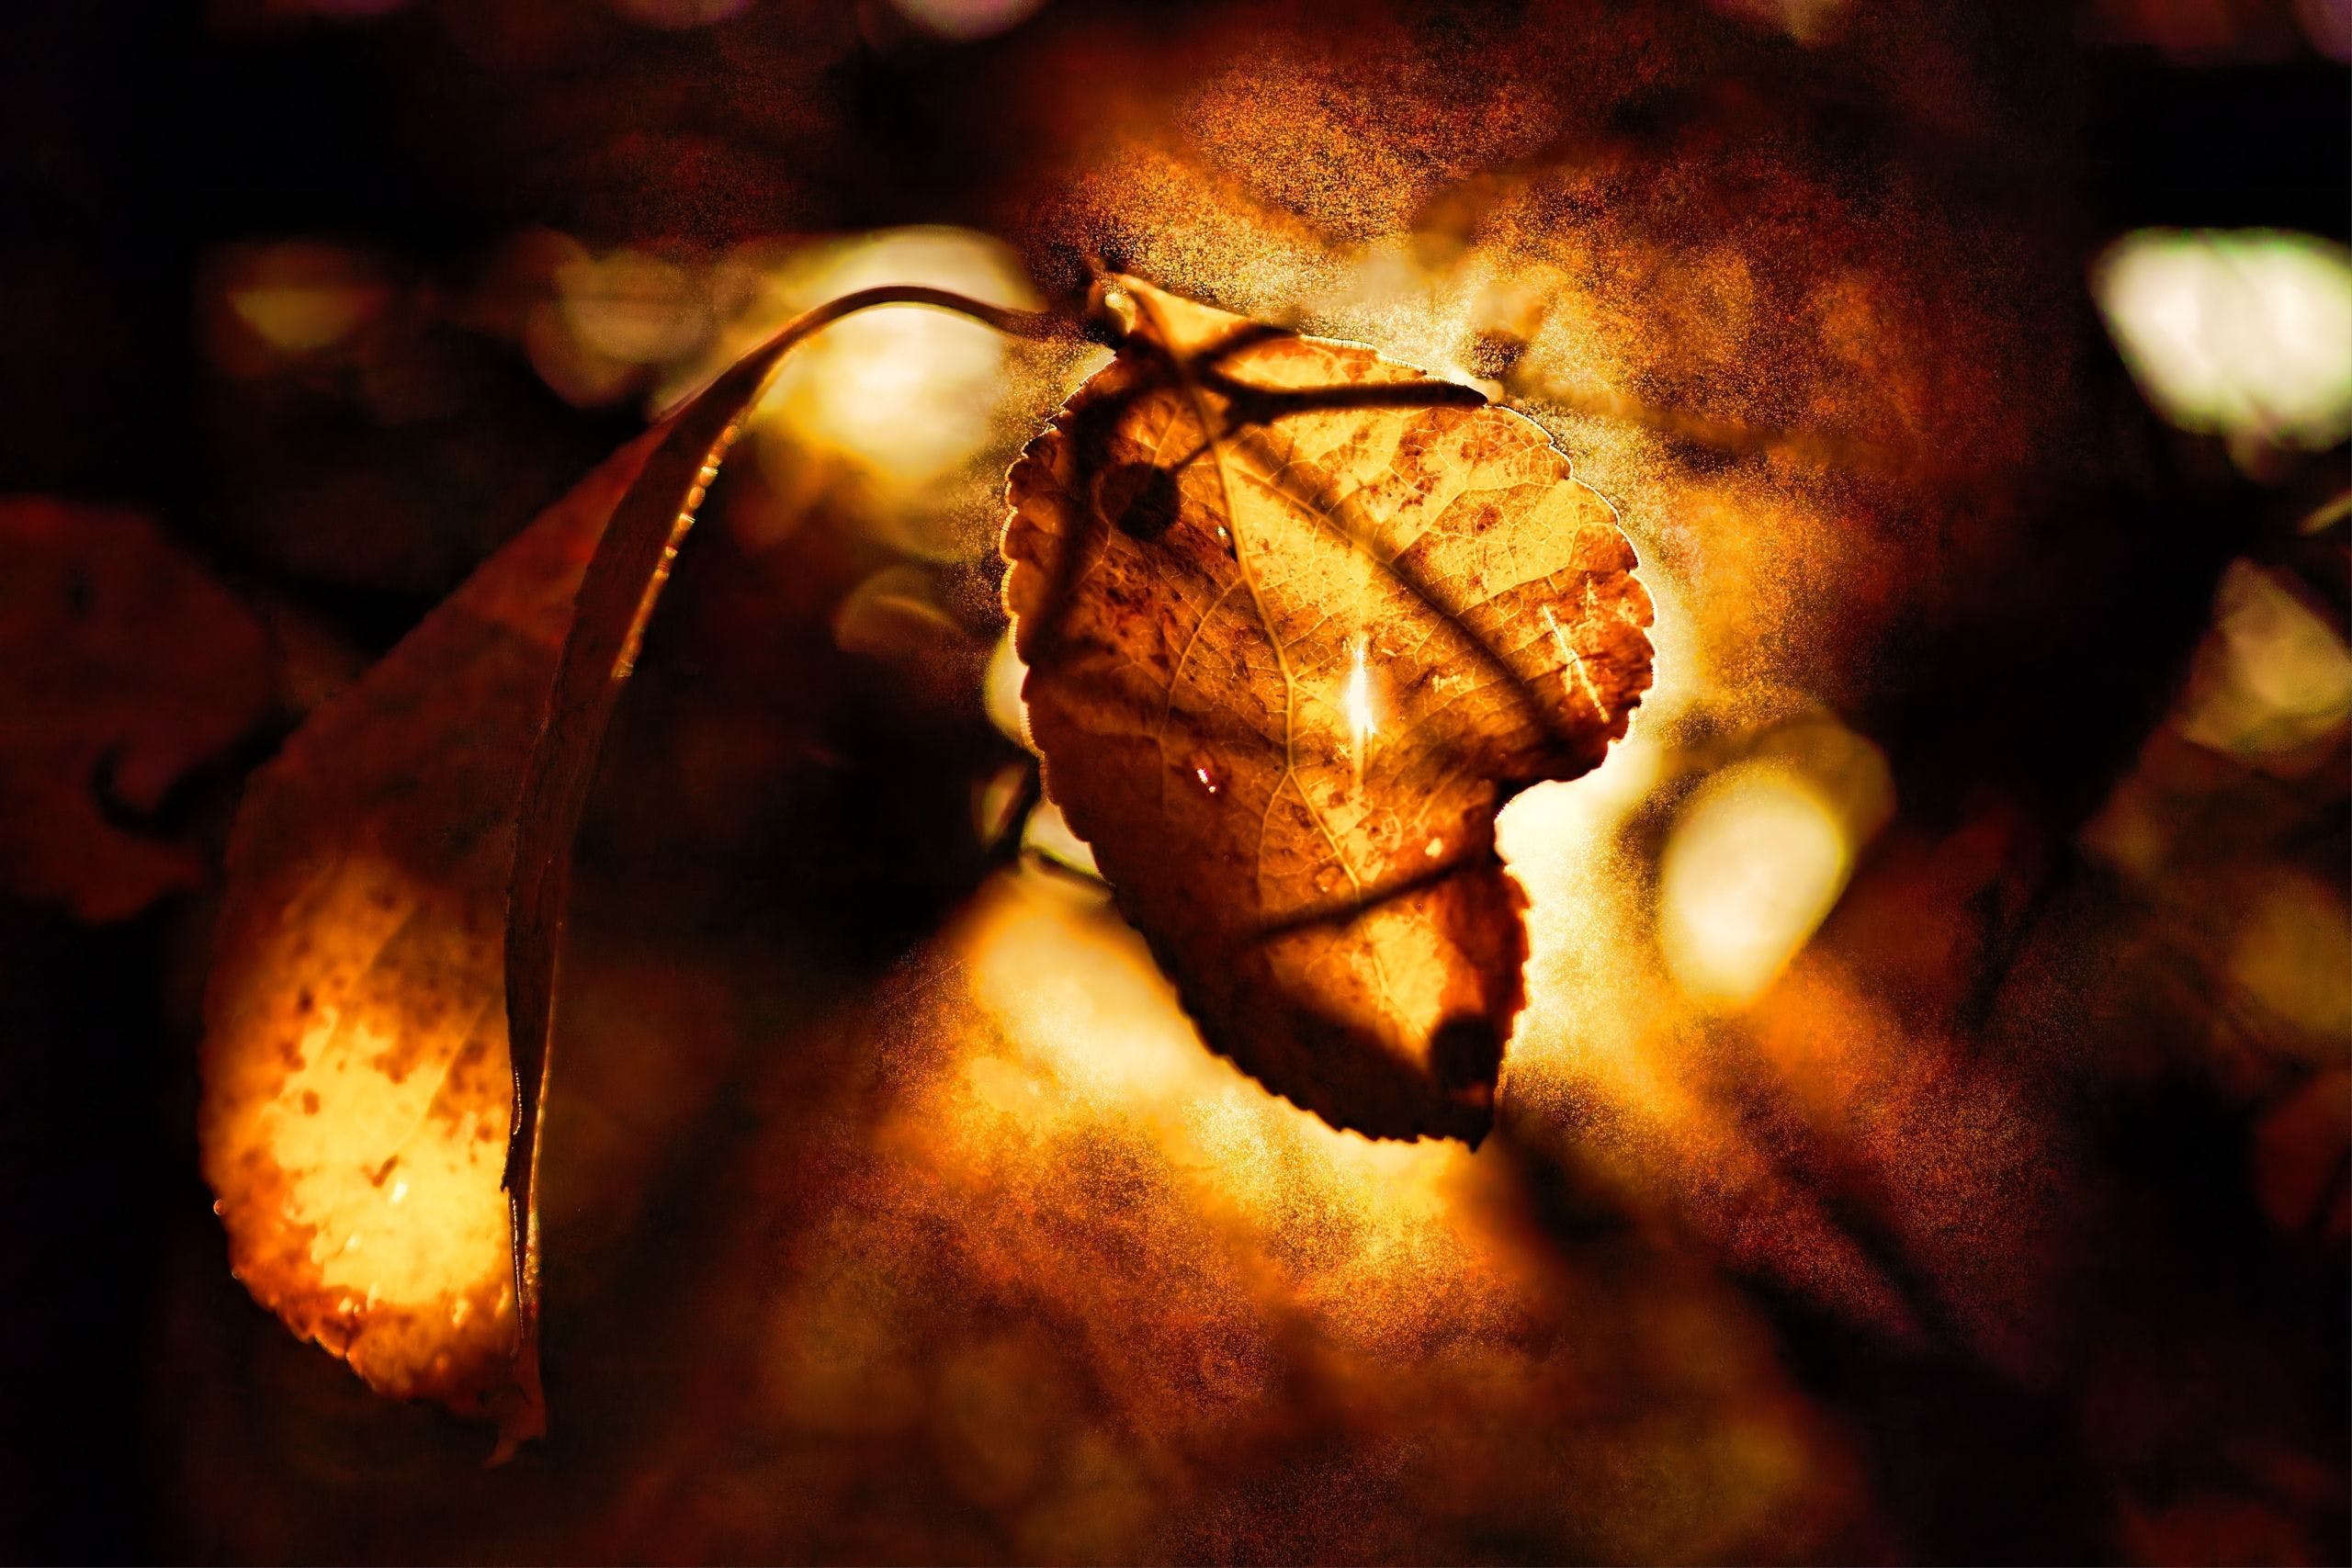 HD Autumn Leaves Wallpaper